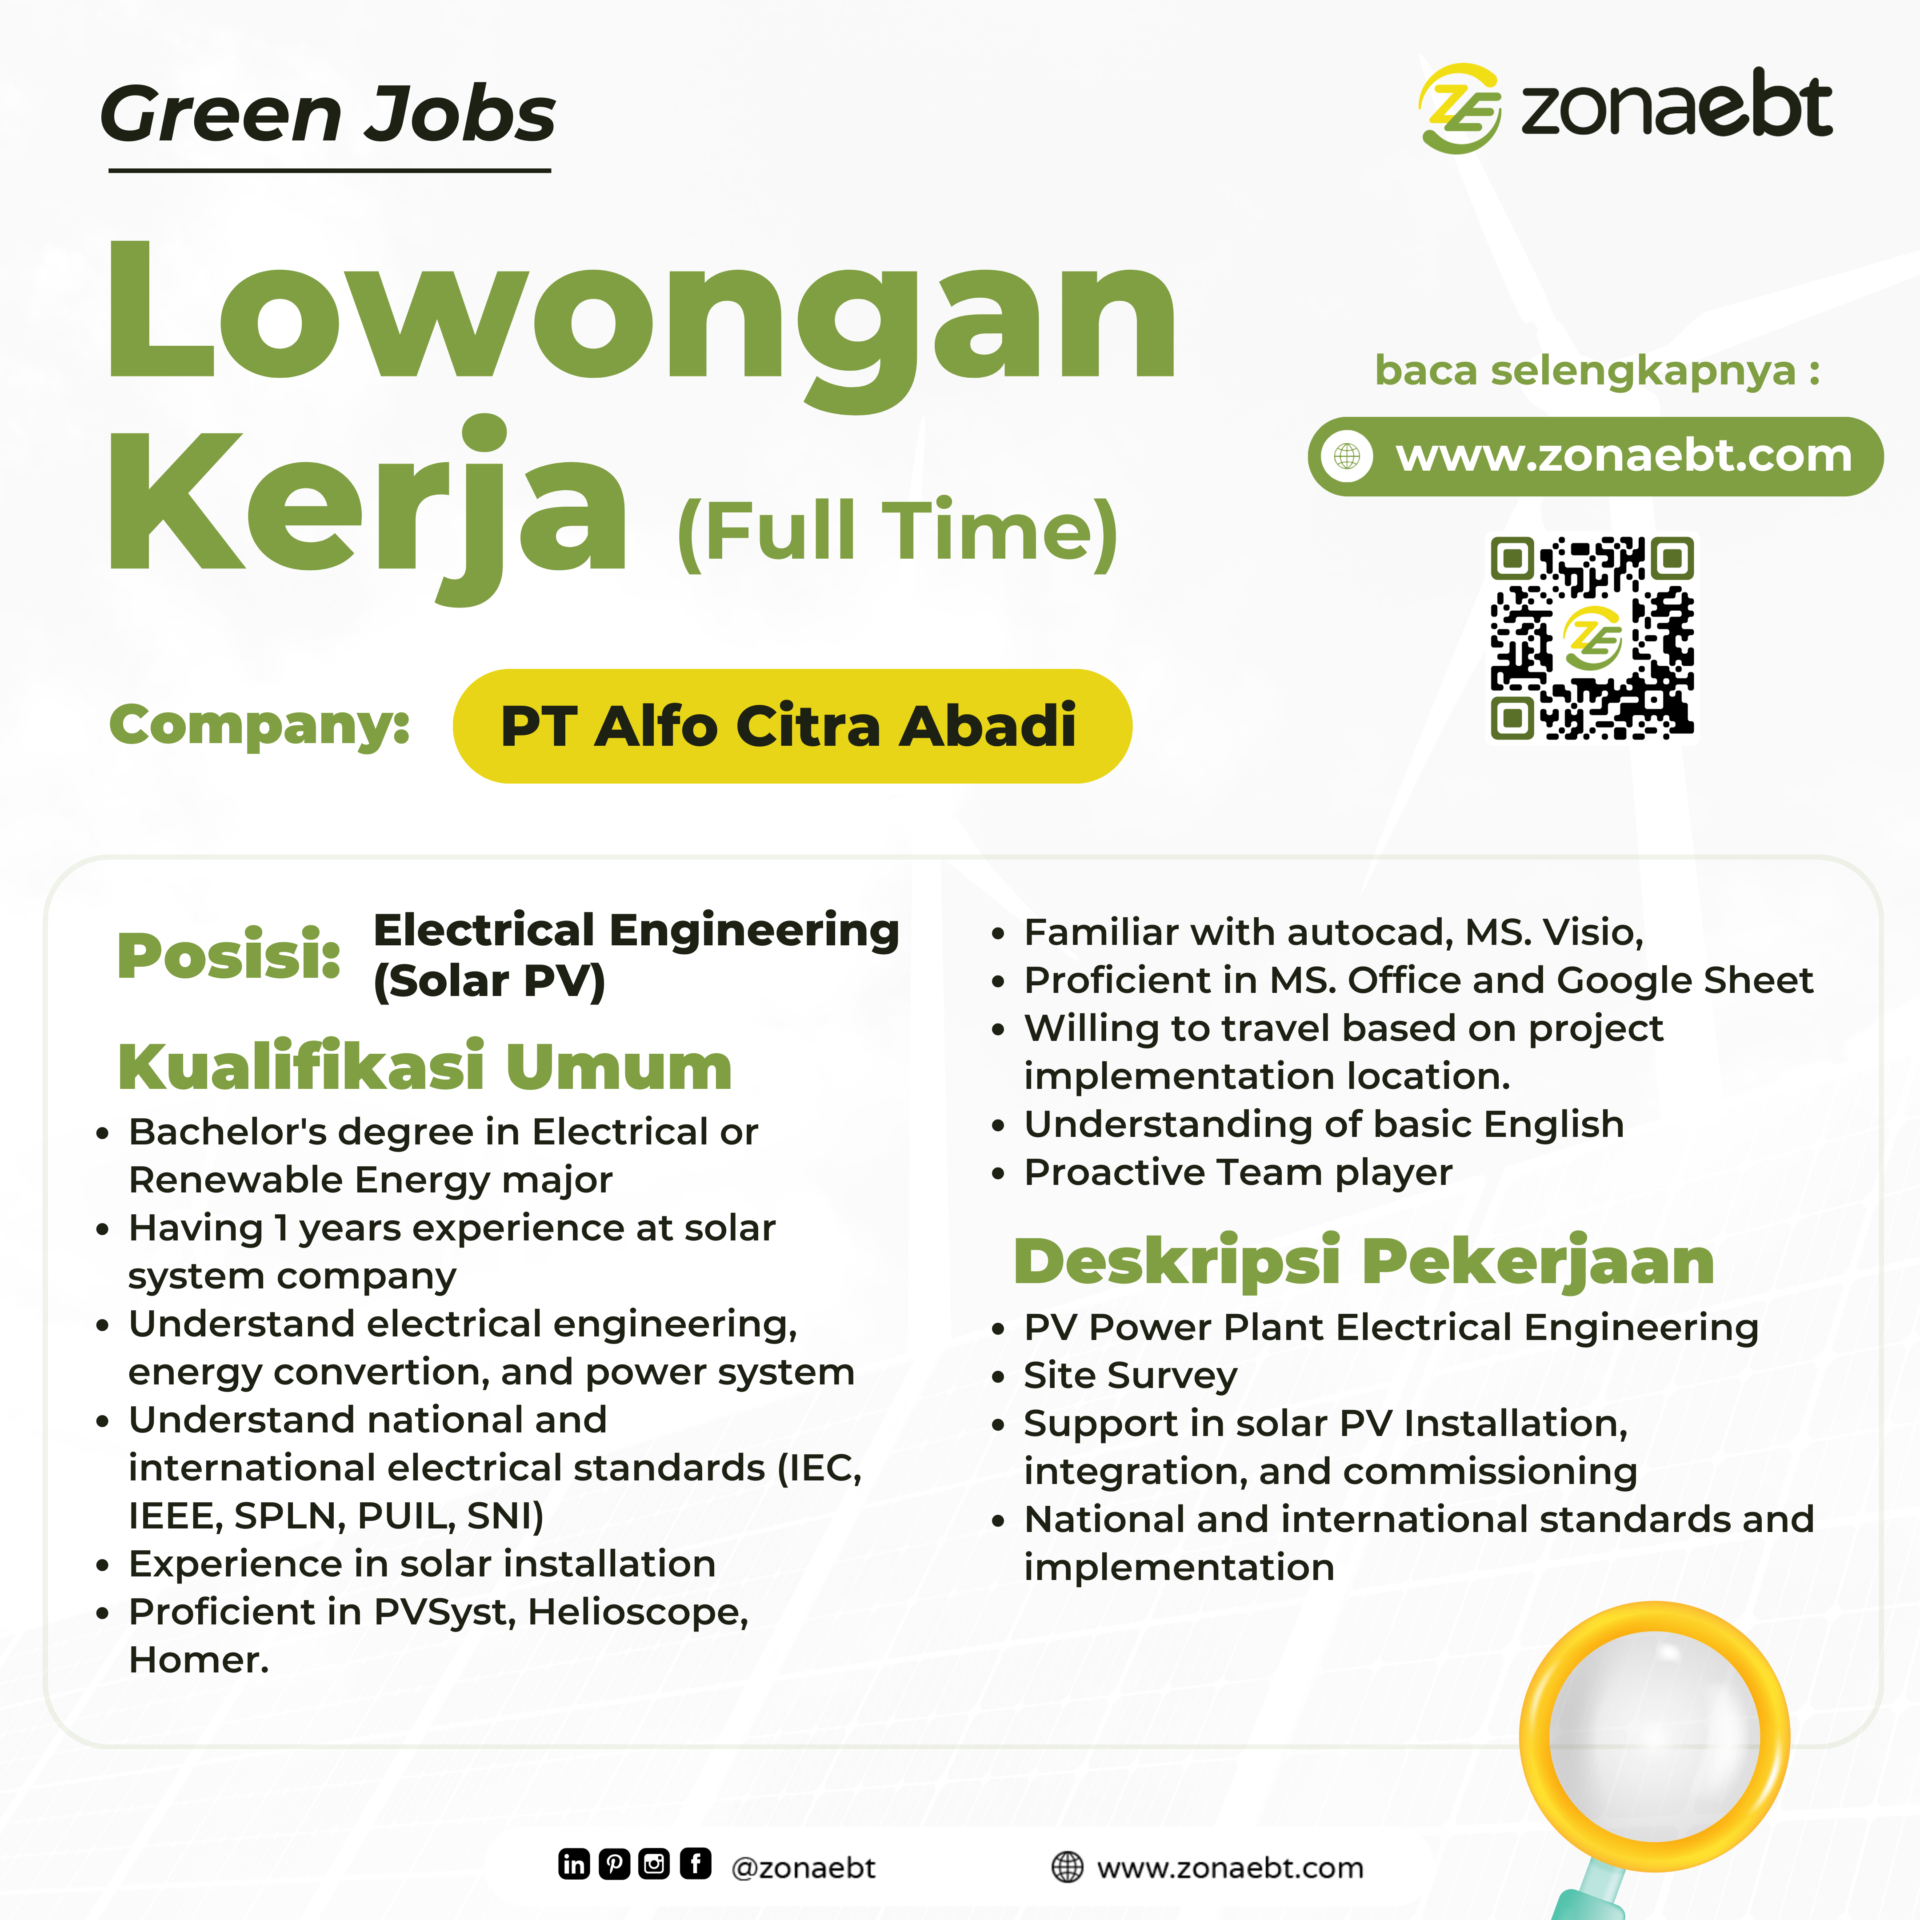 Post Electrical Engineering (Solar PV) Green jobs zonaebt.com